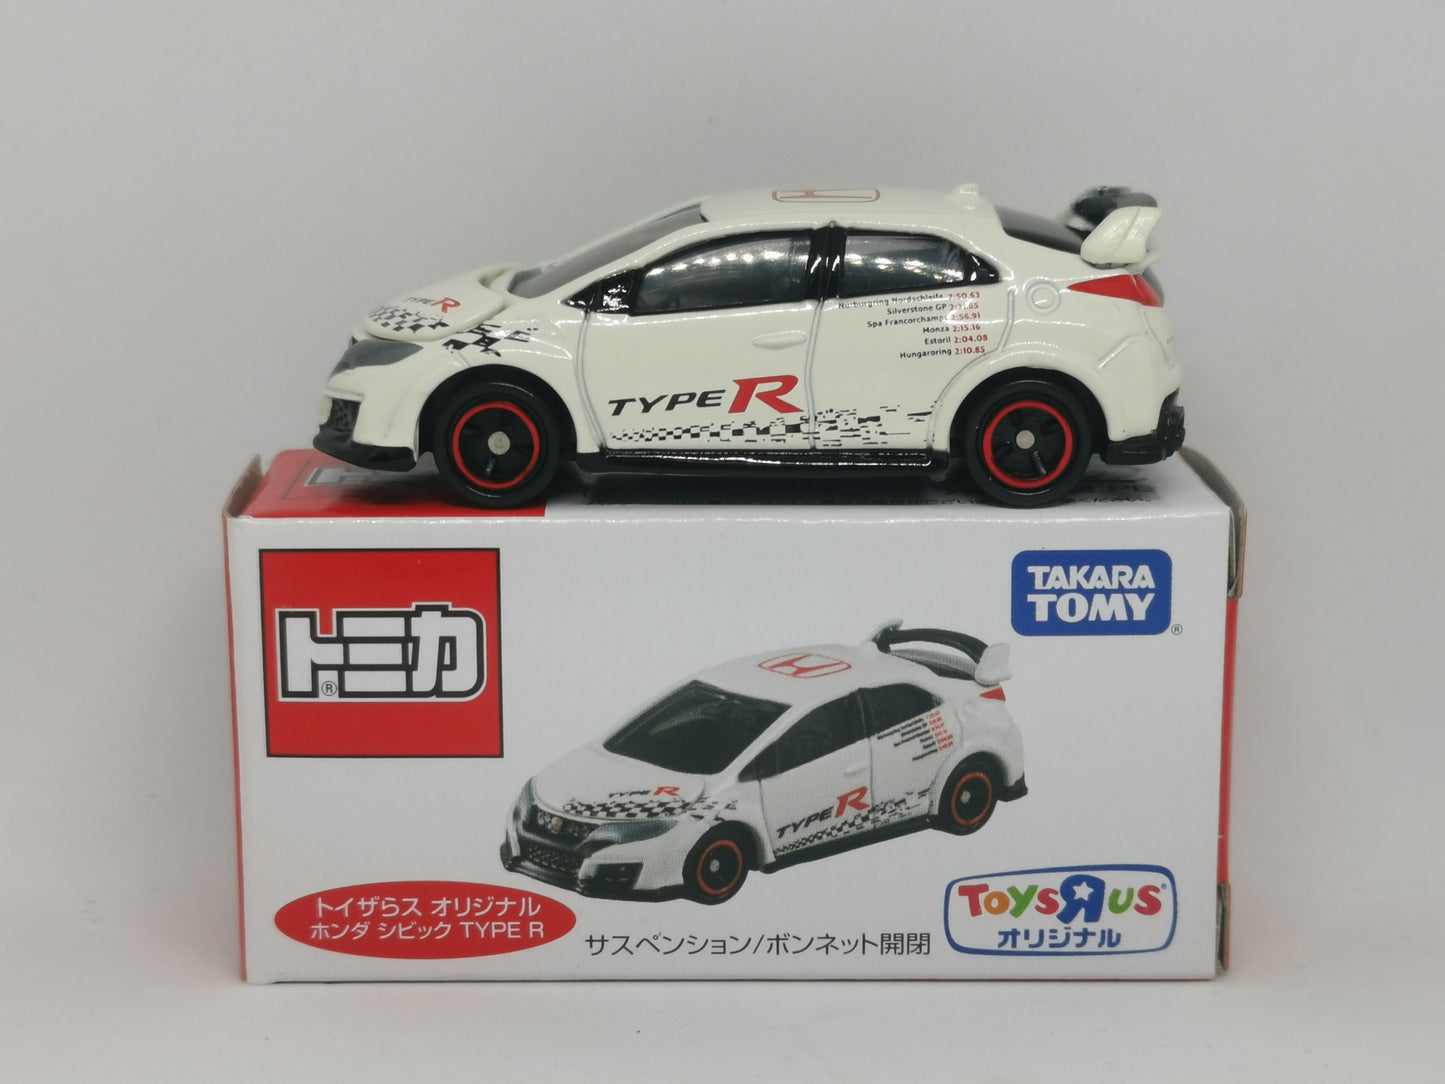 Tomica Japan Toys"R"us Exclusive Honda Civic FK2 TypeR